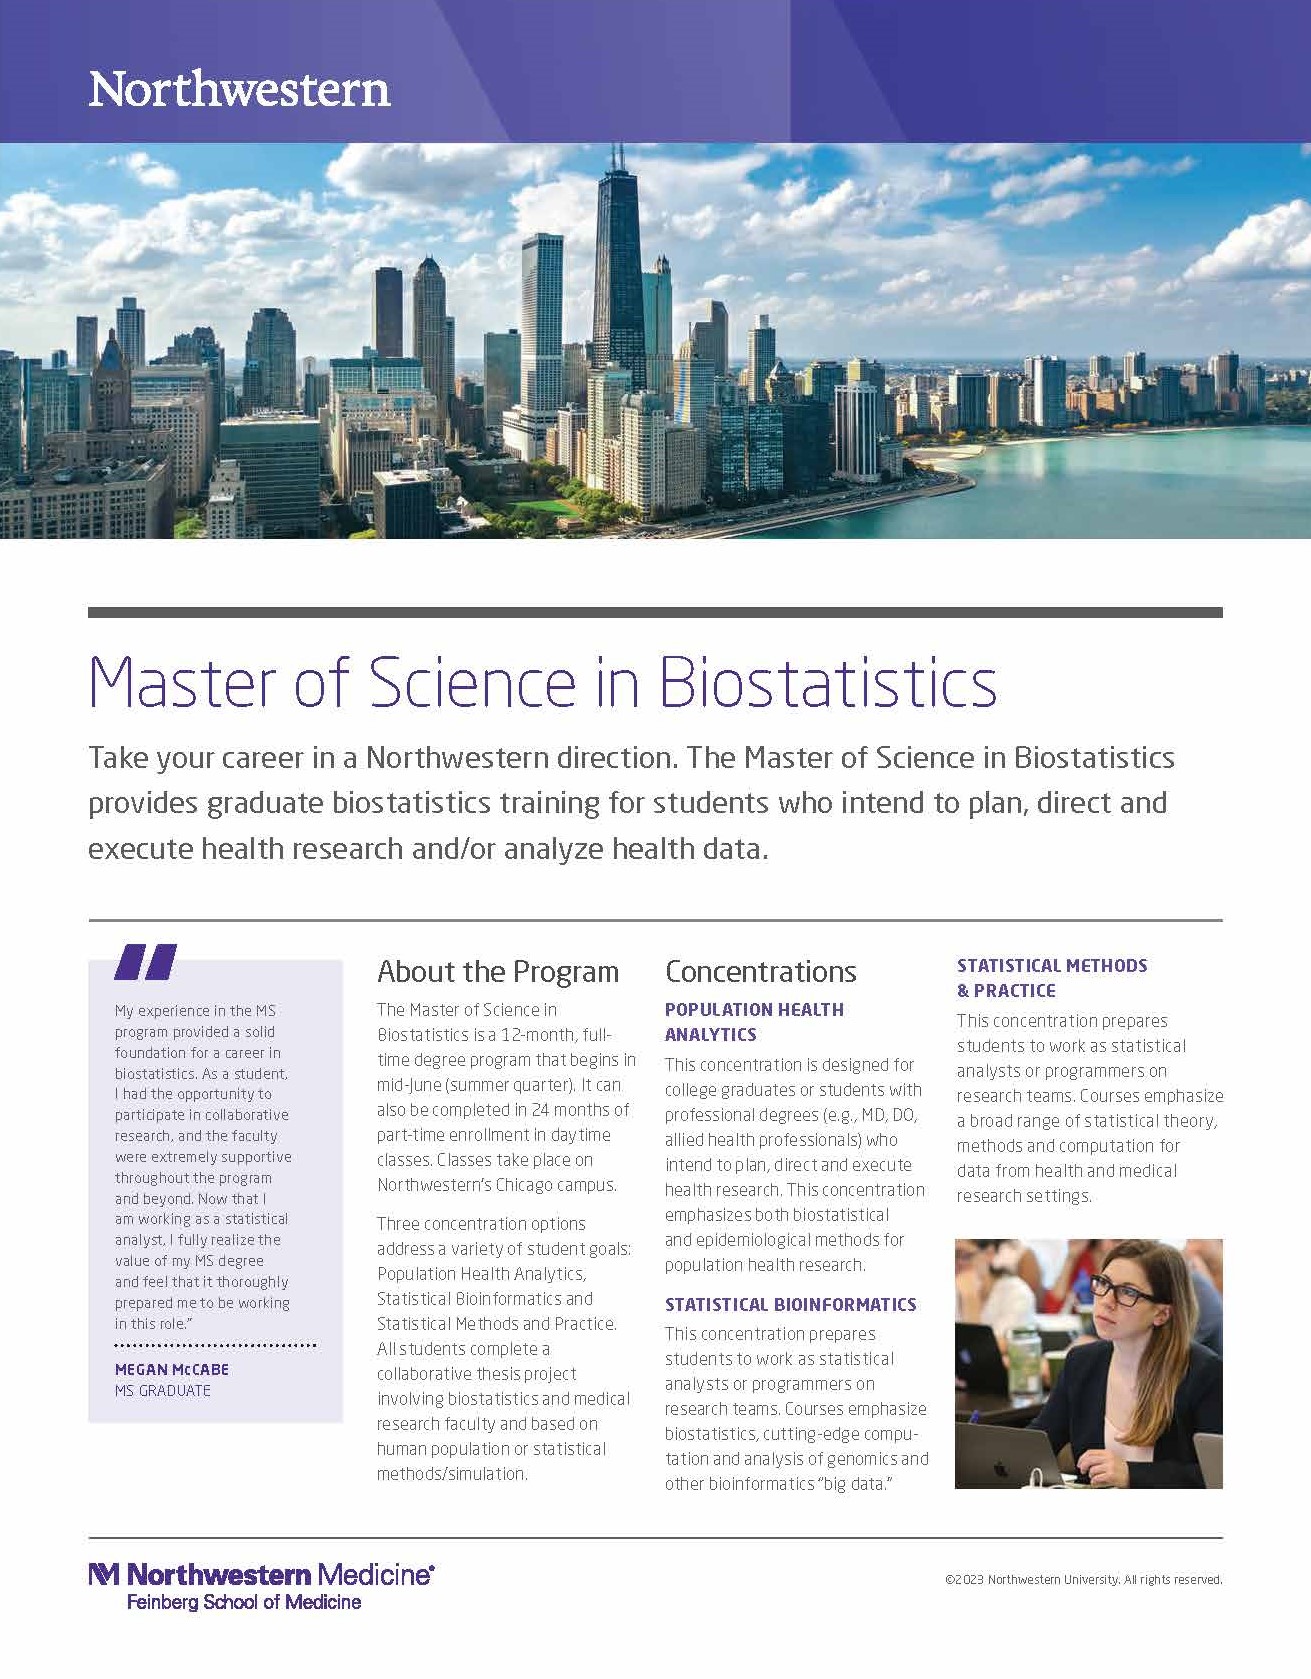 Northwestern MS in Biostatistics Program